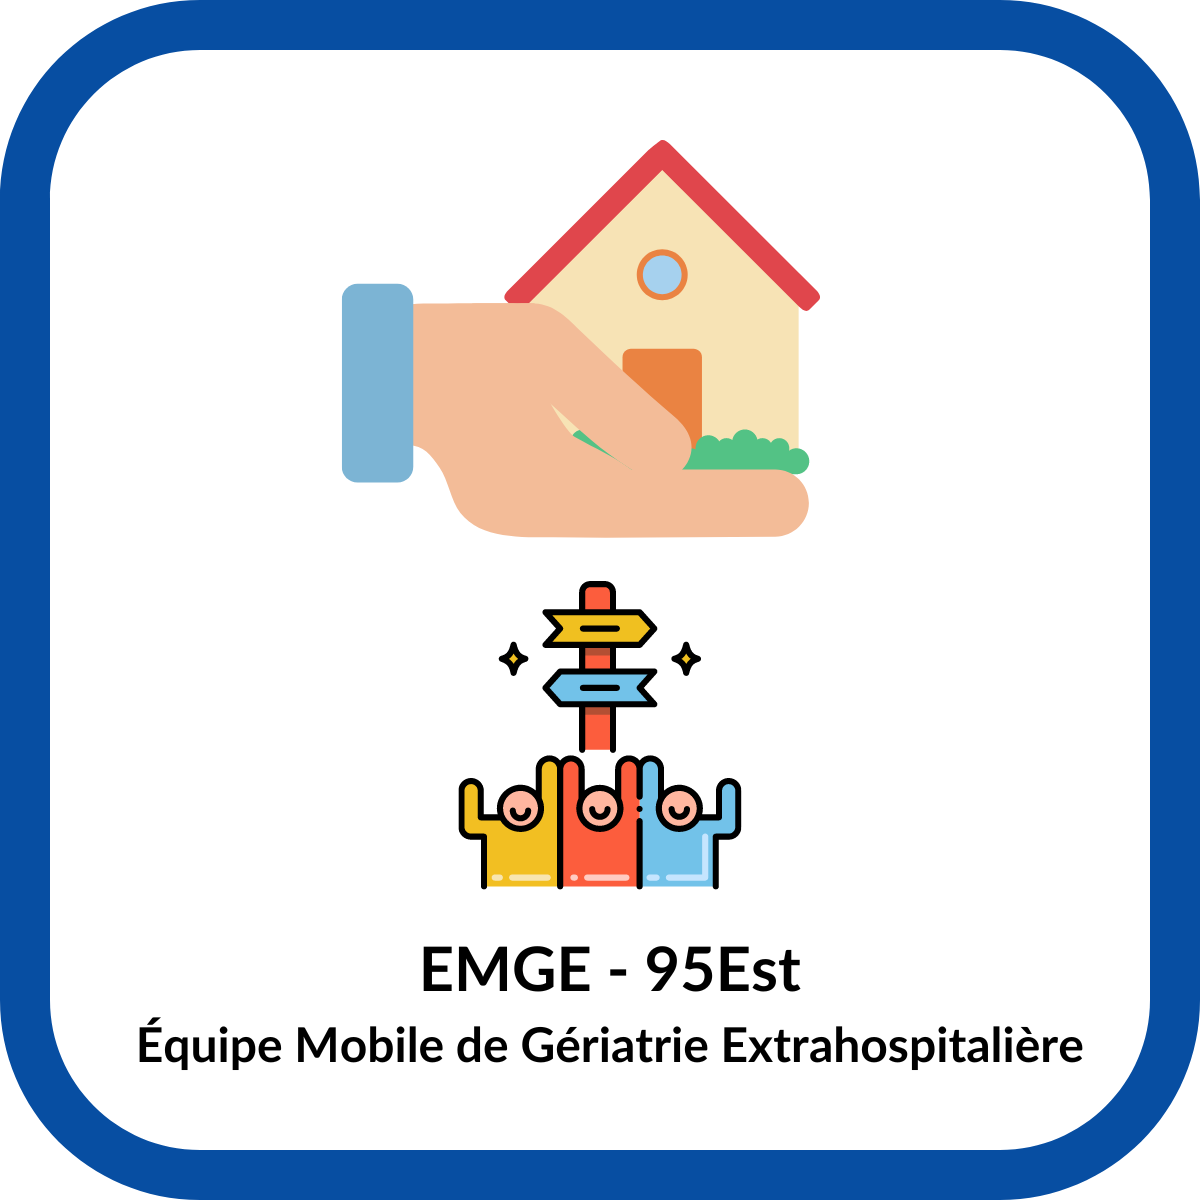 EMGE - 95 Est